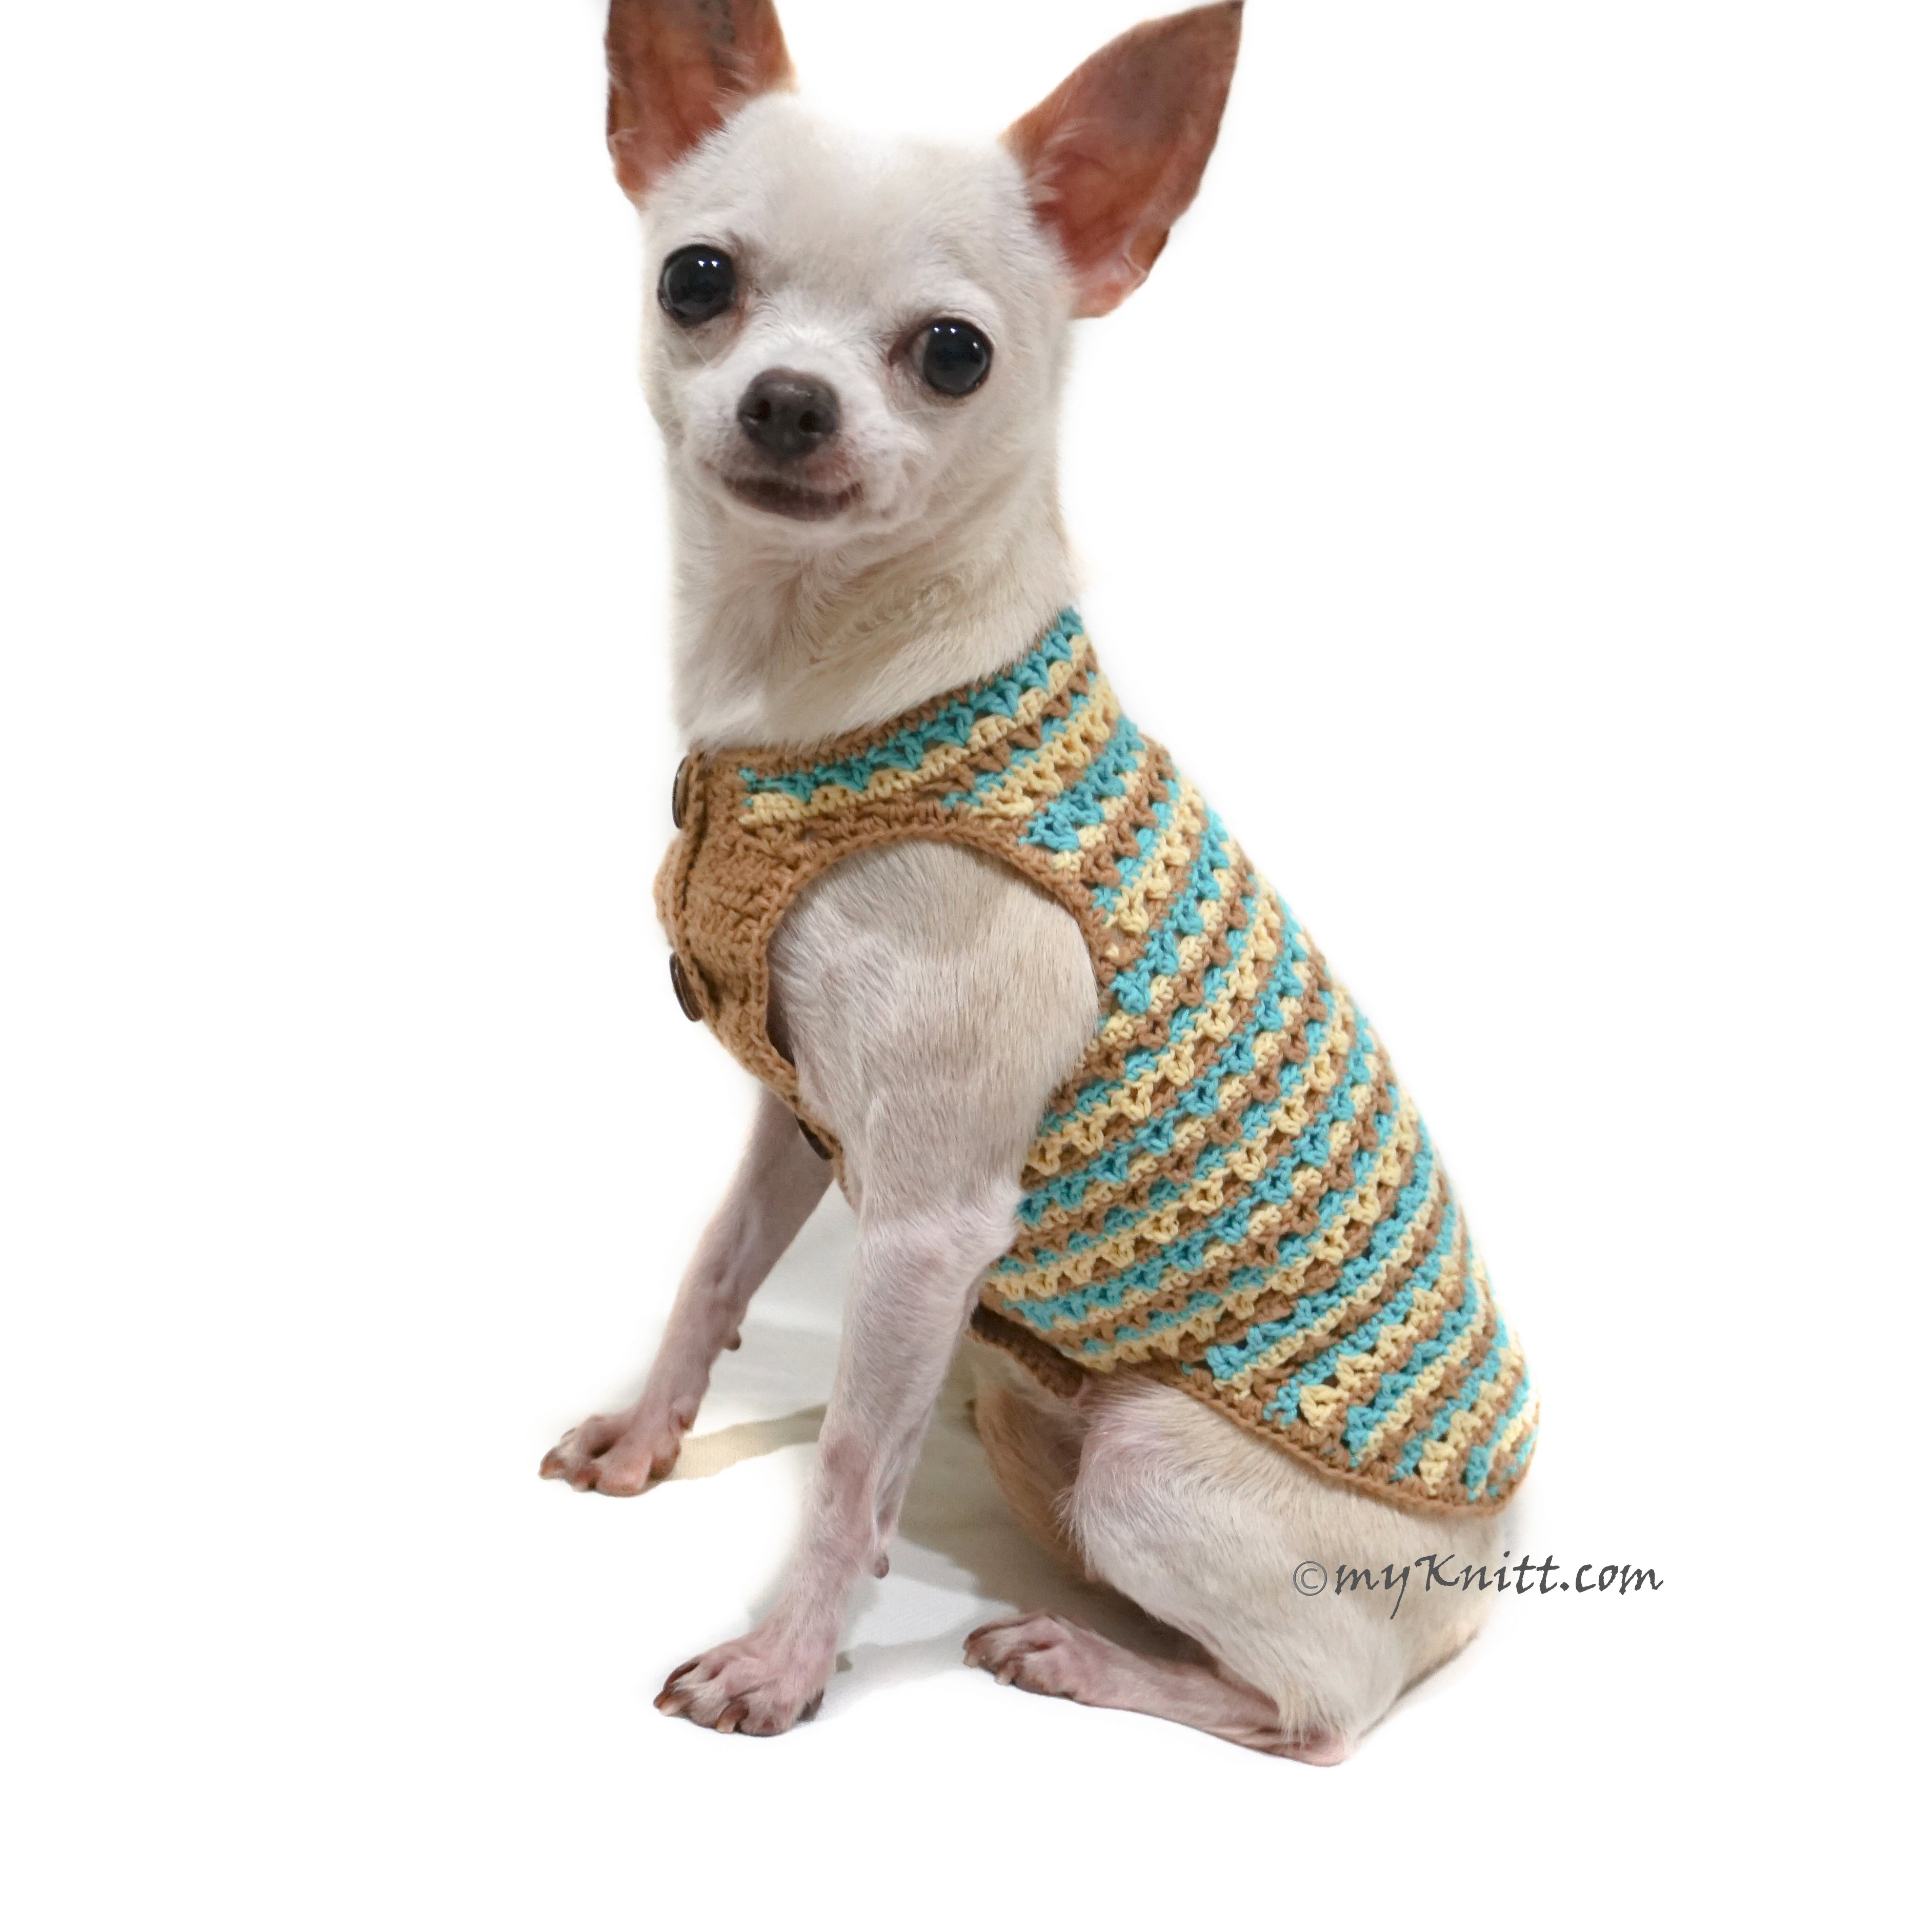 Teal Dog Shirt, Dog Clothes Boy, Chihuahua Clothes Summer DK774 by Myknitt